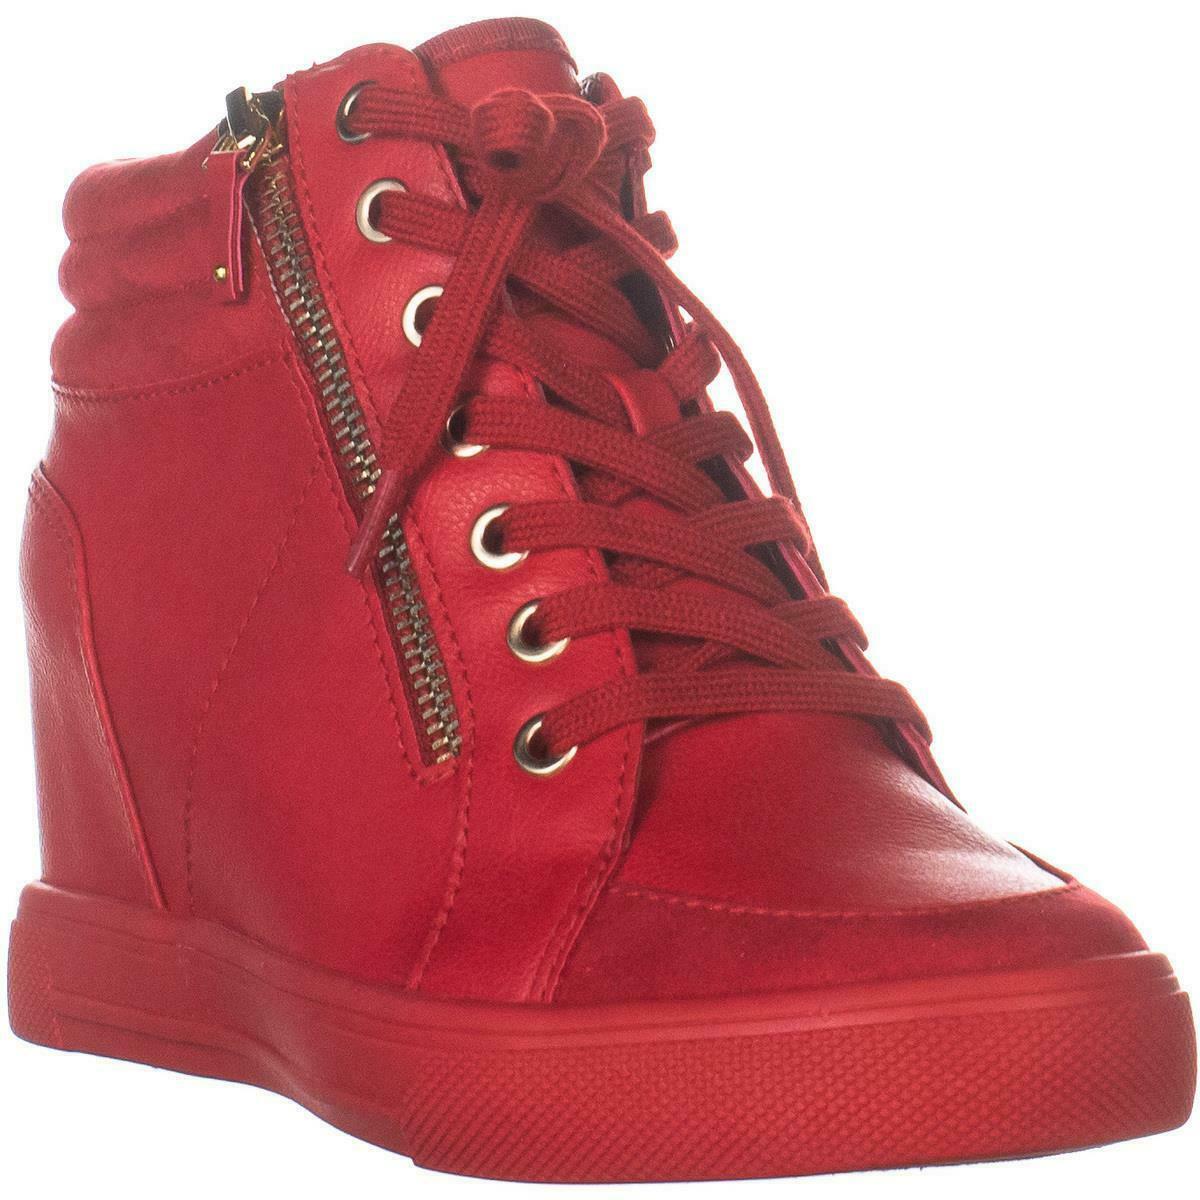 Aldo Kaia Hidden Wedge Fashion Sneakers, Red, 7 US / 37.5 EU - Athletic